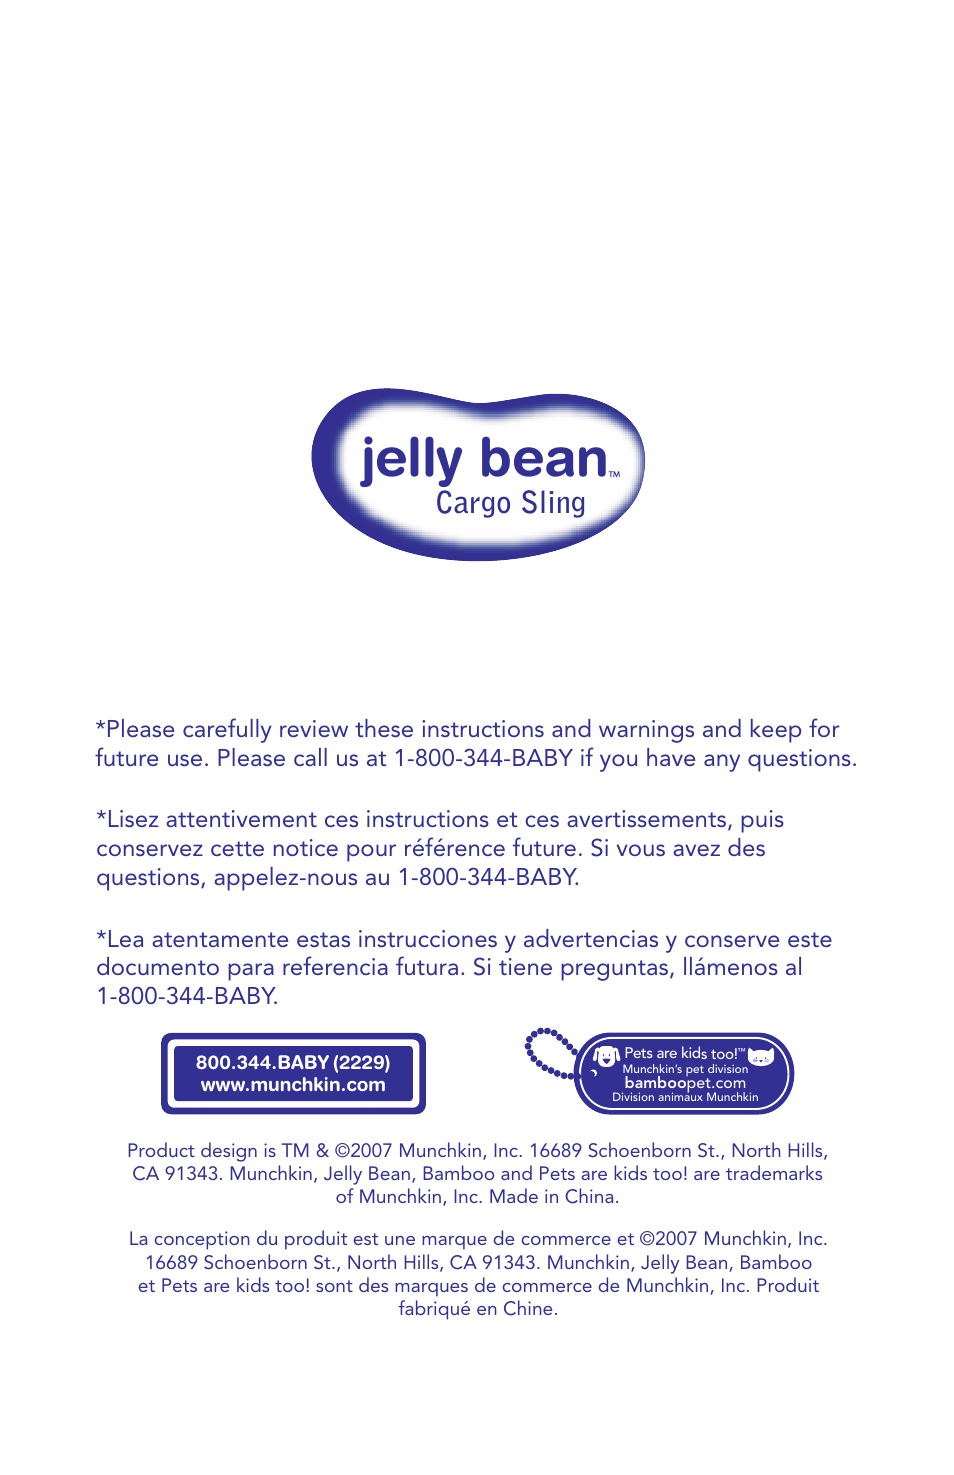 jelly bean cargo sling